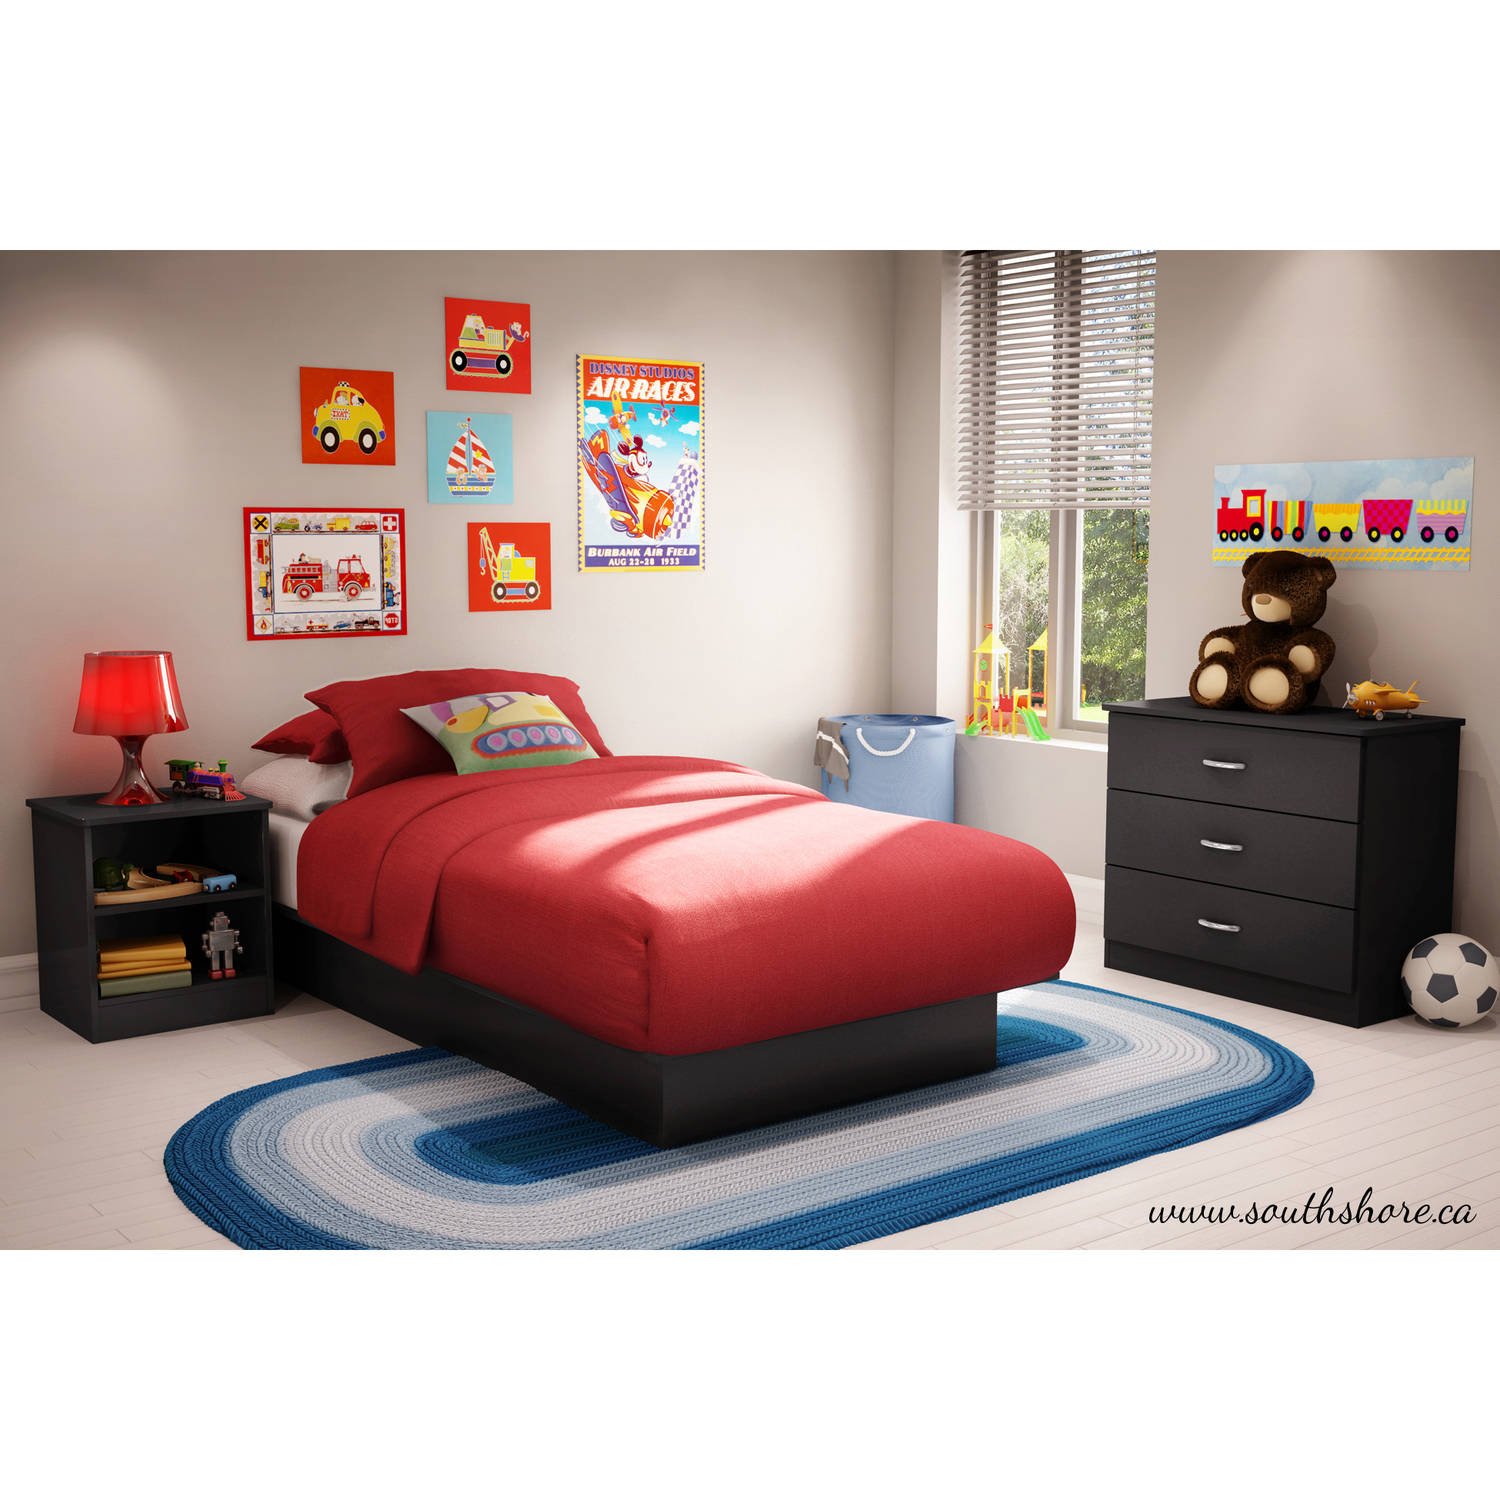 South Shore Smart Basics Twin Bedroom Set, Multiple Finishes - image 1 of 6